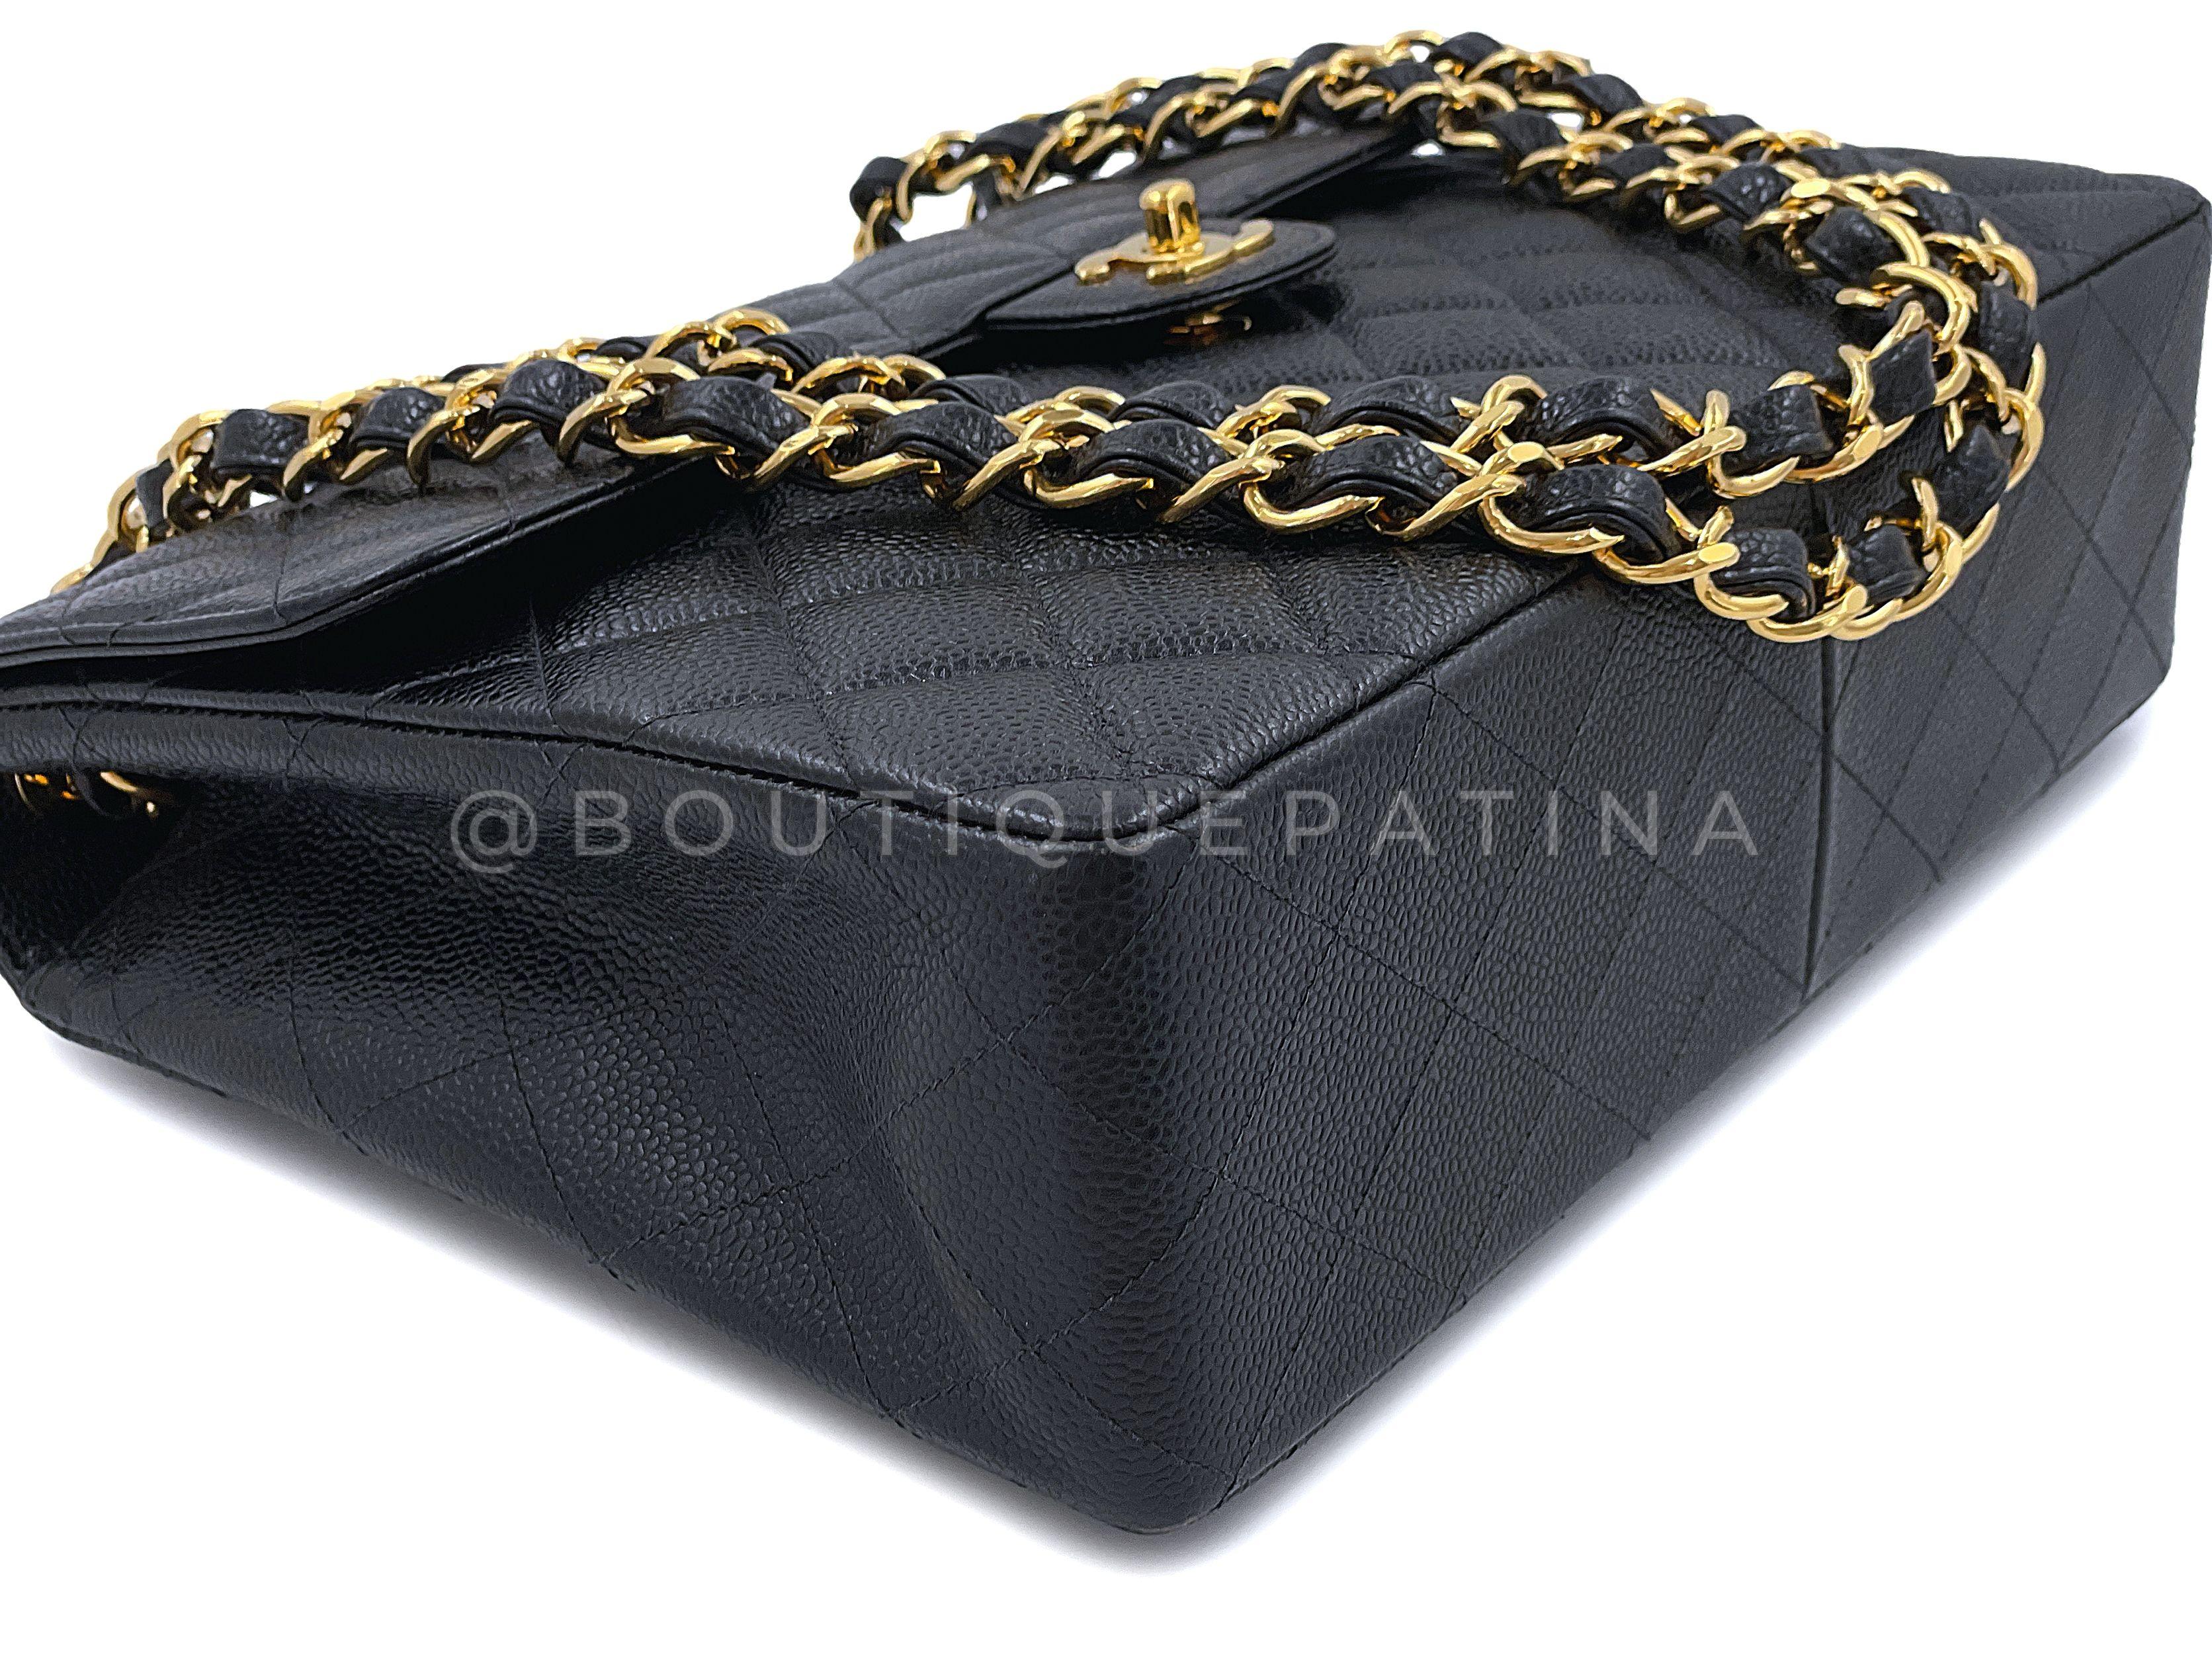 Pristine Chanel 2002 Vintage Black Caviar Jumbo Classic Flap Bag 24k GHW 67313 For Sale 3